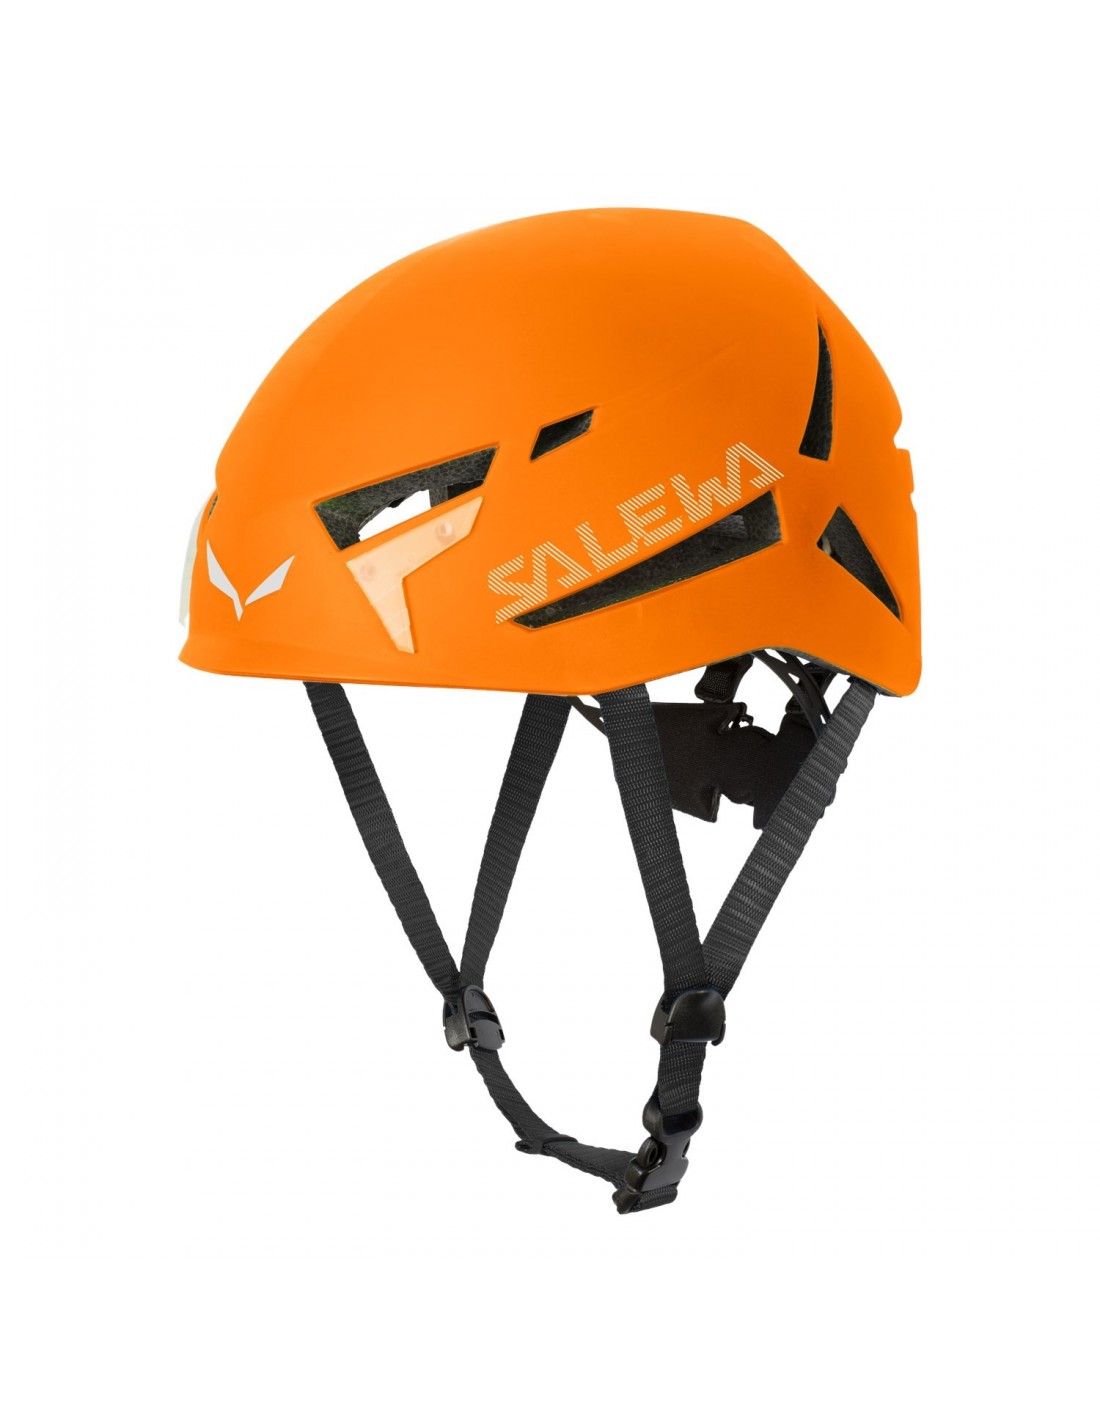 Salewa Kletterhelm Vega Orange Kletterhelmfarbe - Orange, Kletterhelmgewicht - 220 - 250g, Kletterhelmgröße (Kopfumfang) - ~ 53 - 59 cm, von Salewa